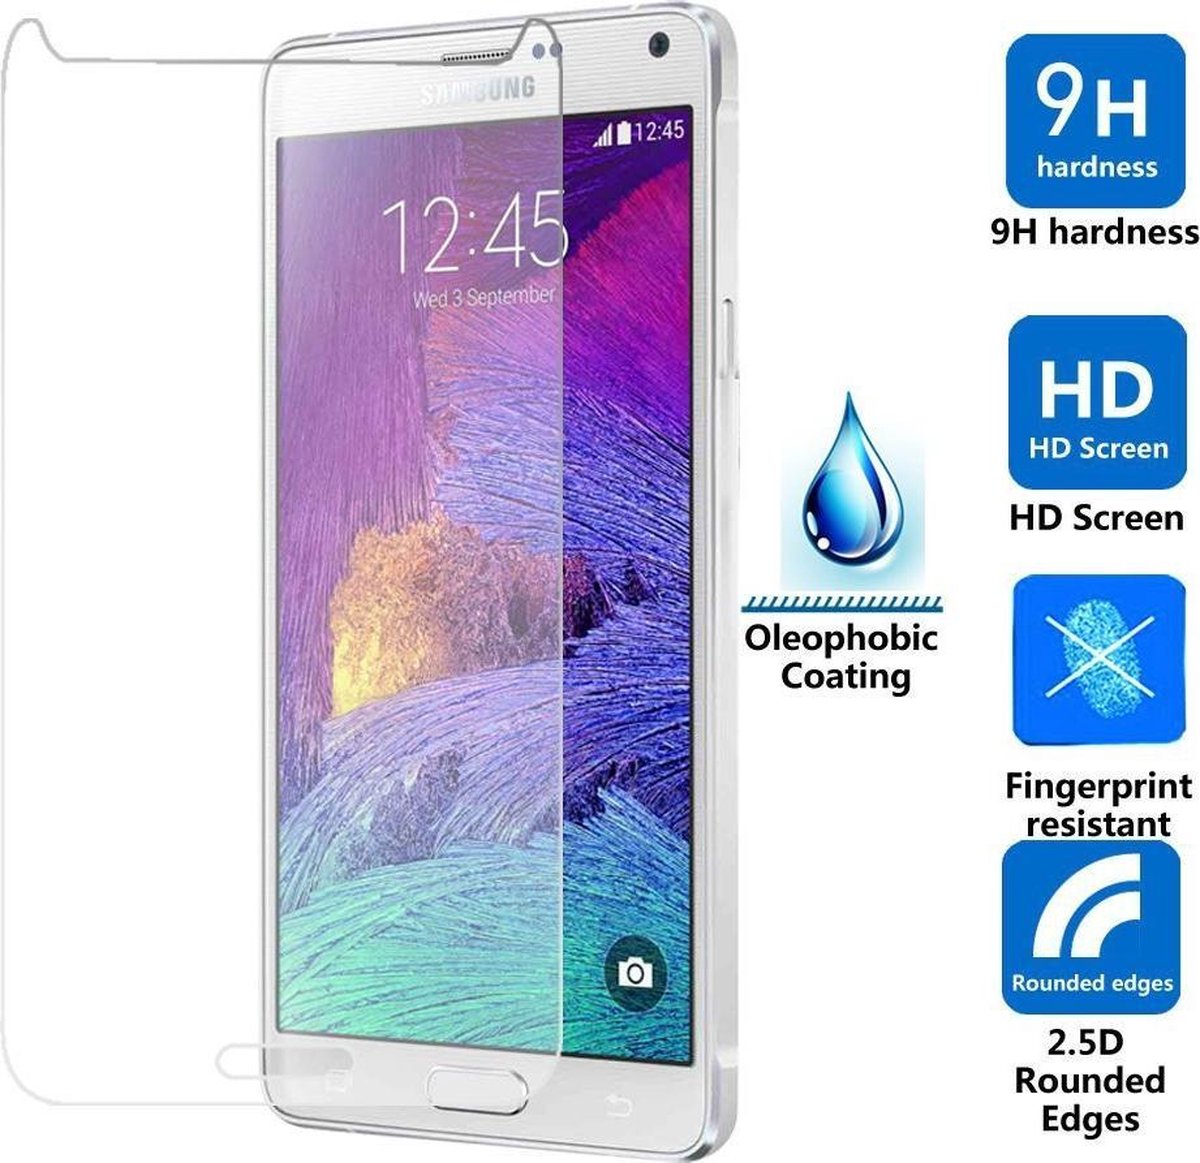 1+1 Gratis Tempered display glas Screen protector Samsung Galaxy Core Prime